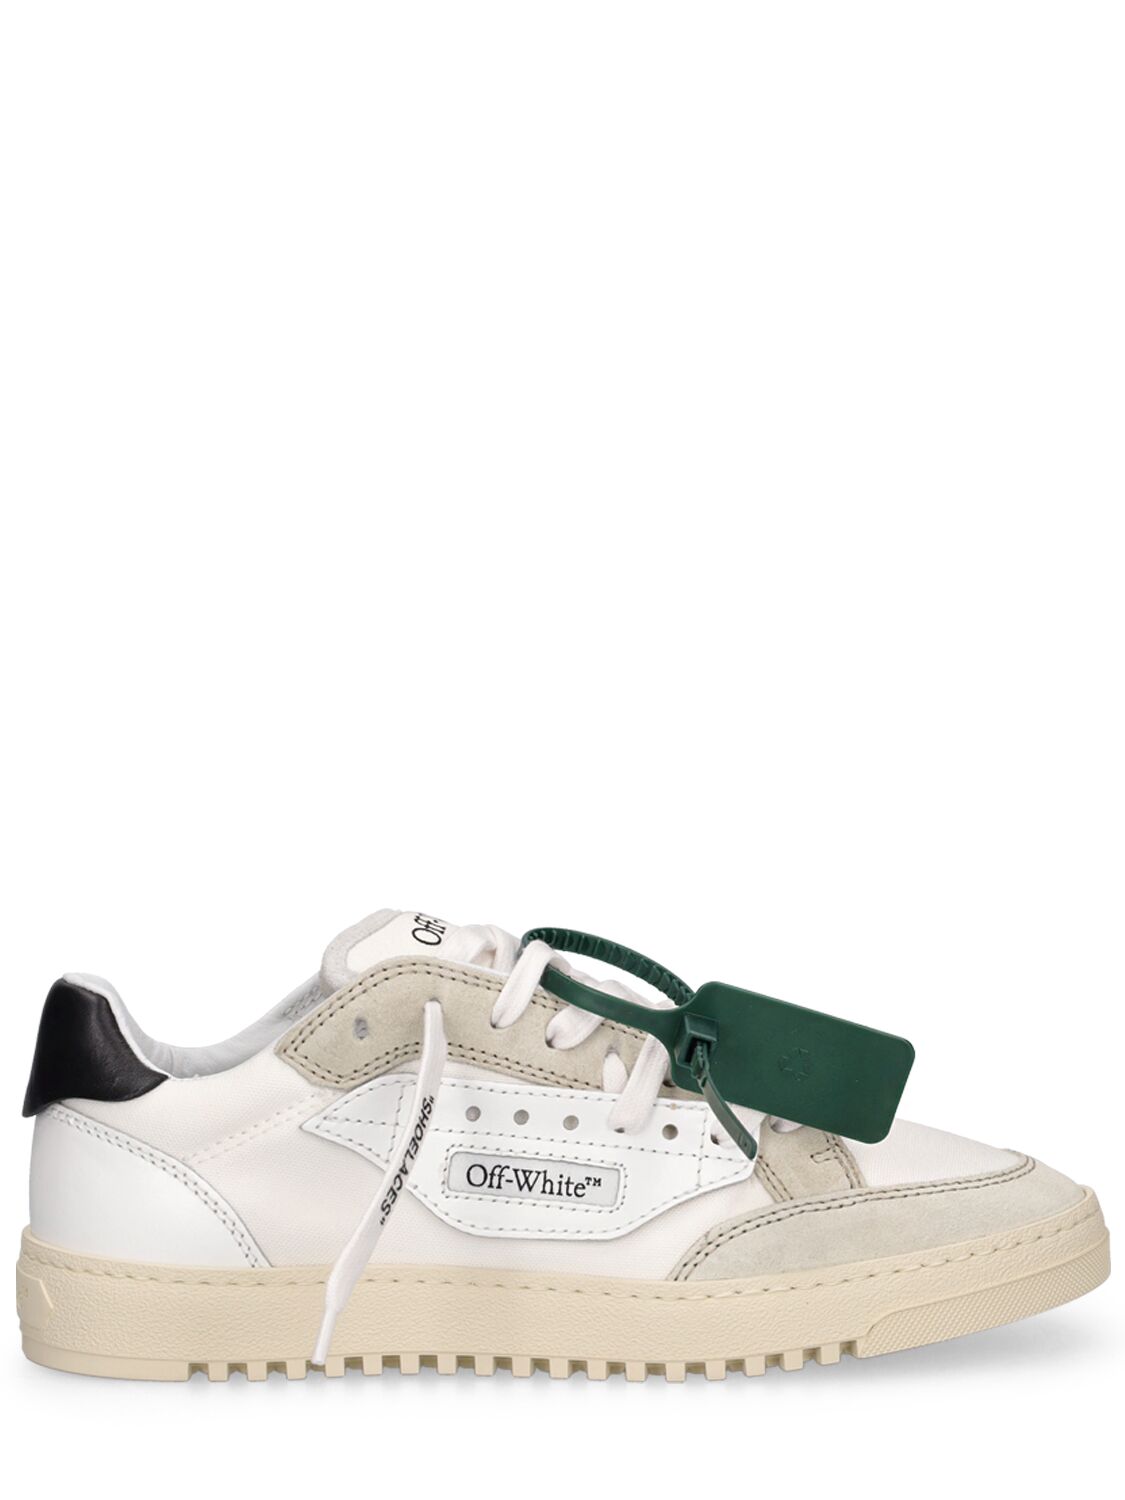 Off-White White 5.0 Sneakers